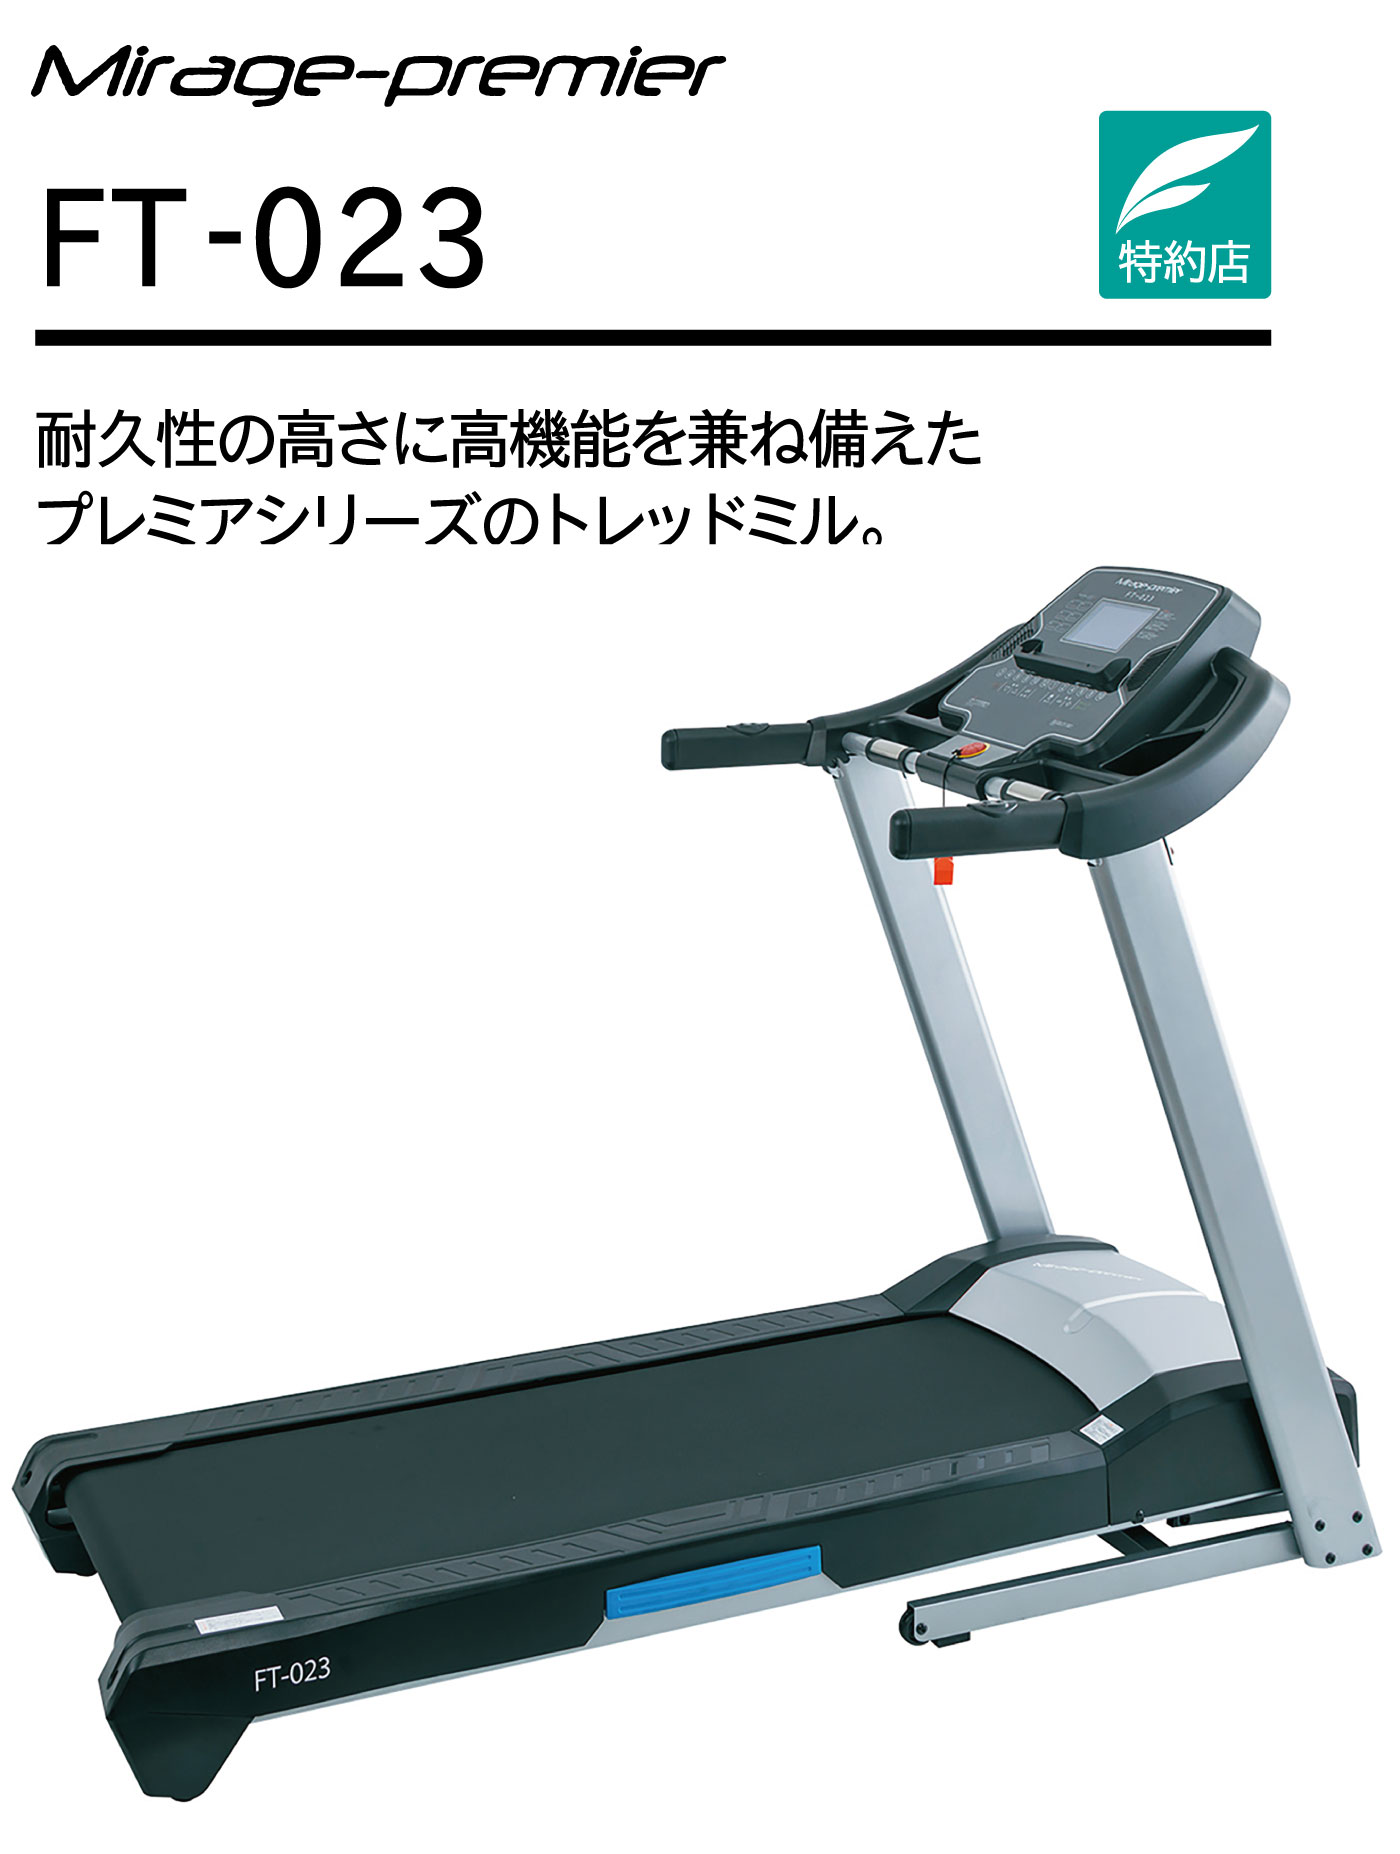 FT-023／家庭用ルームランナー（ランニングマシン トレッドミル）【フィットネスマシン エクササイズマシン】〈ランニング ジョギング〉《フジモリ》